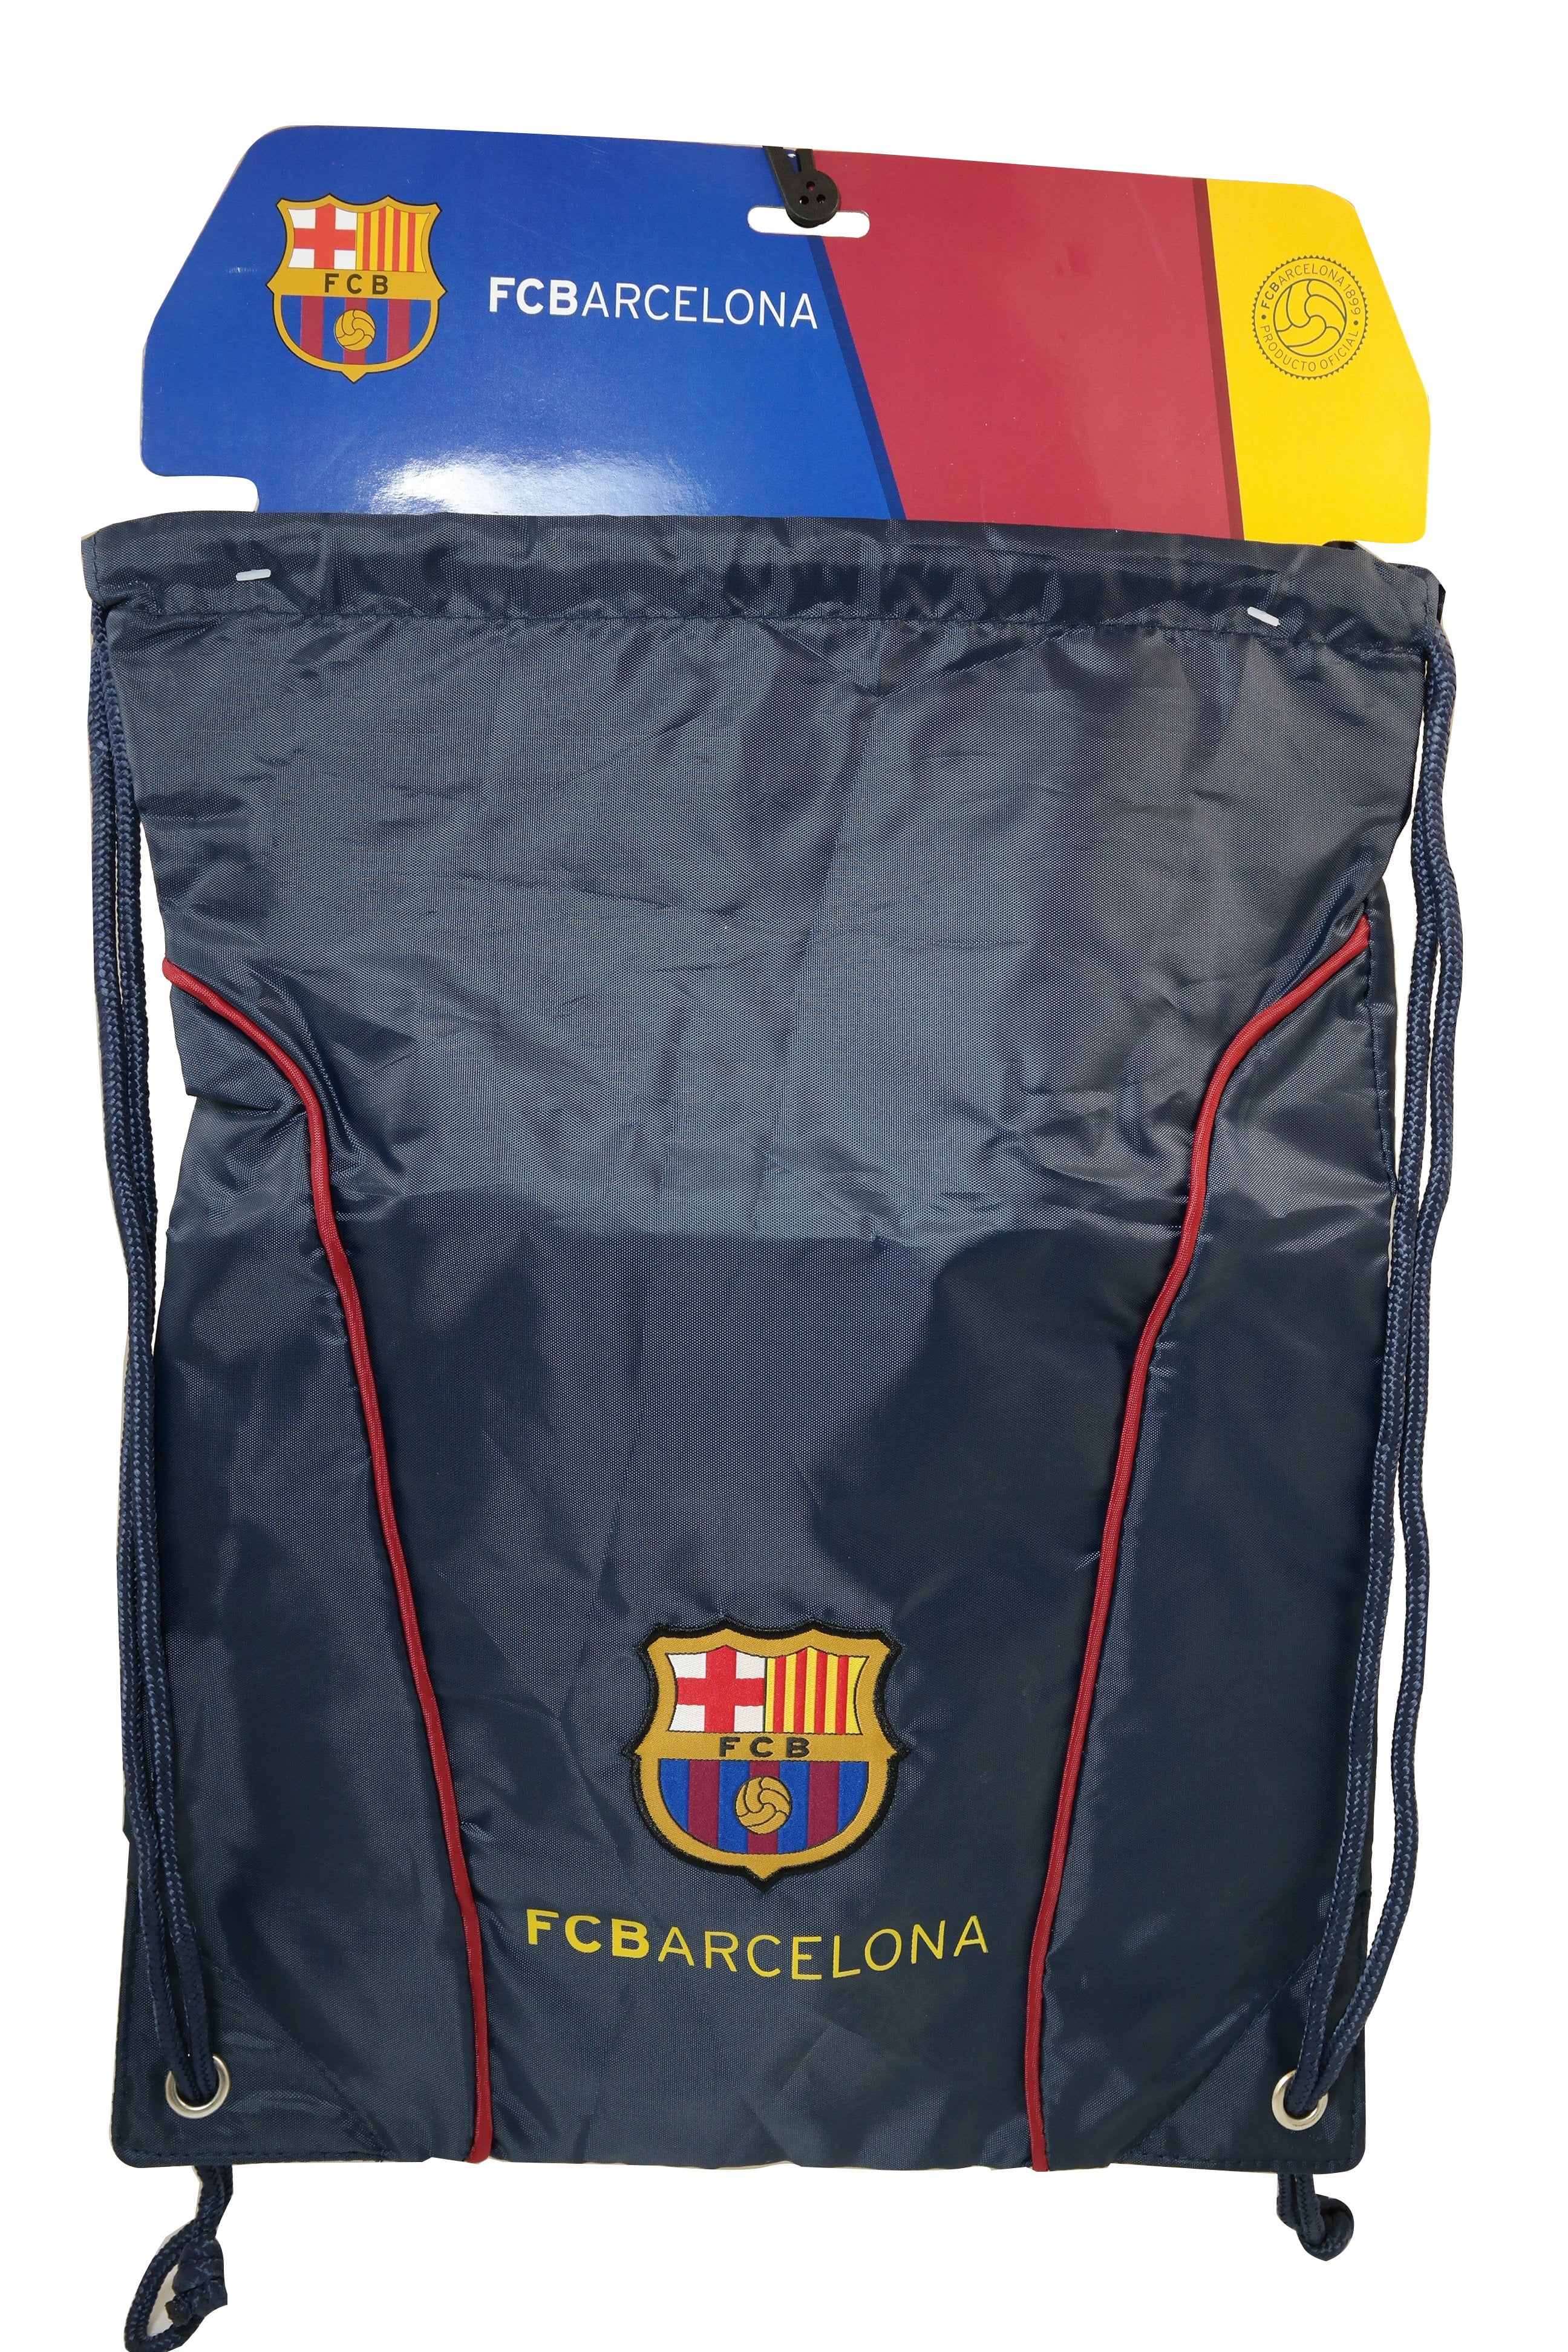 Fc Barcelona Authentic Official Licensed Soccer Drawstring Cinch Sack Bag 004 